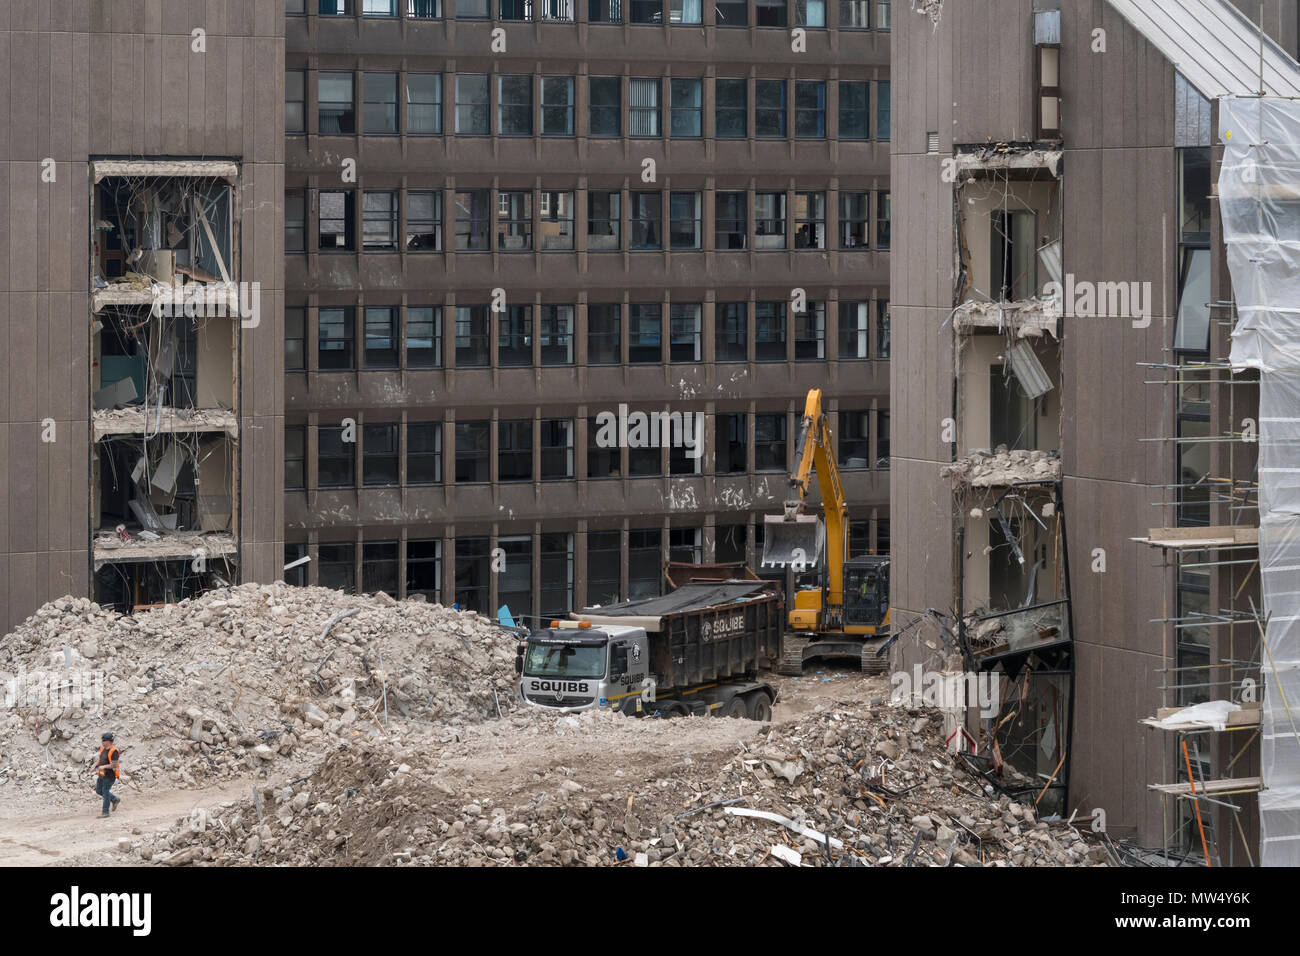 High view of demolition site debris - heavy machinery (excavator & dump truck) working & demolishing office building - Hudson House  York, England, UK. Stock Photo